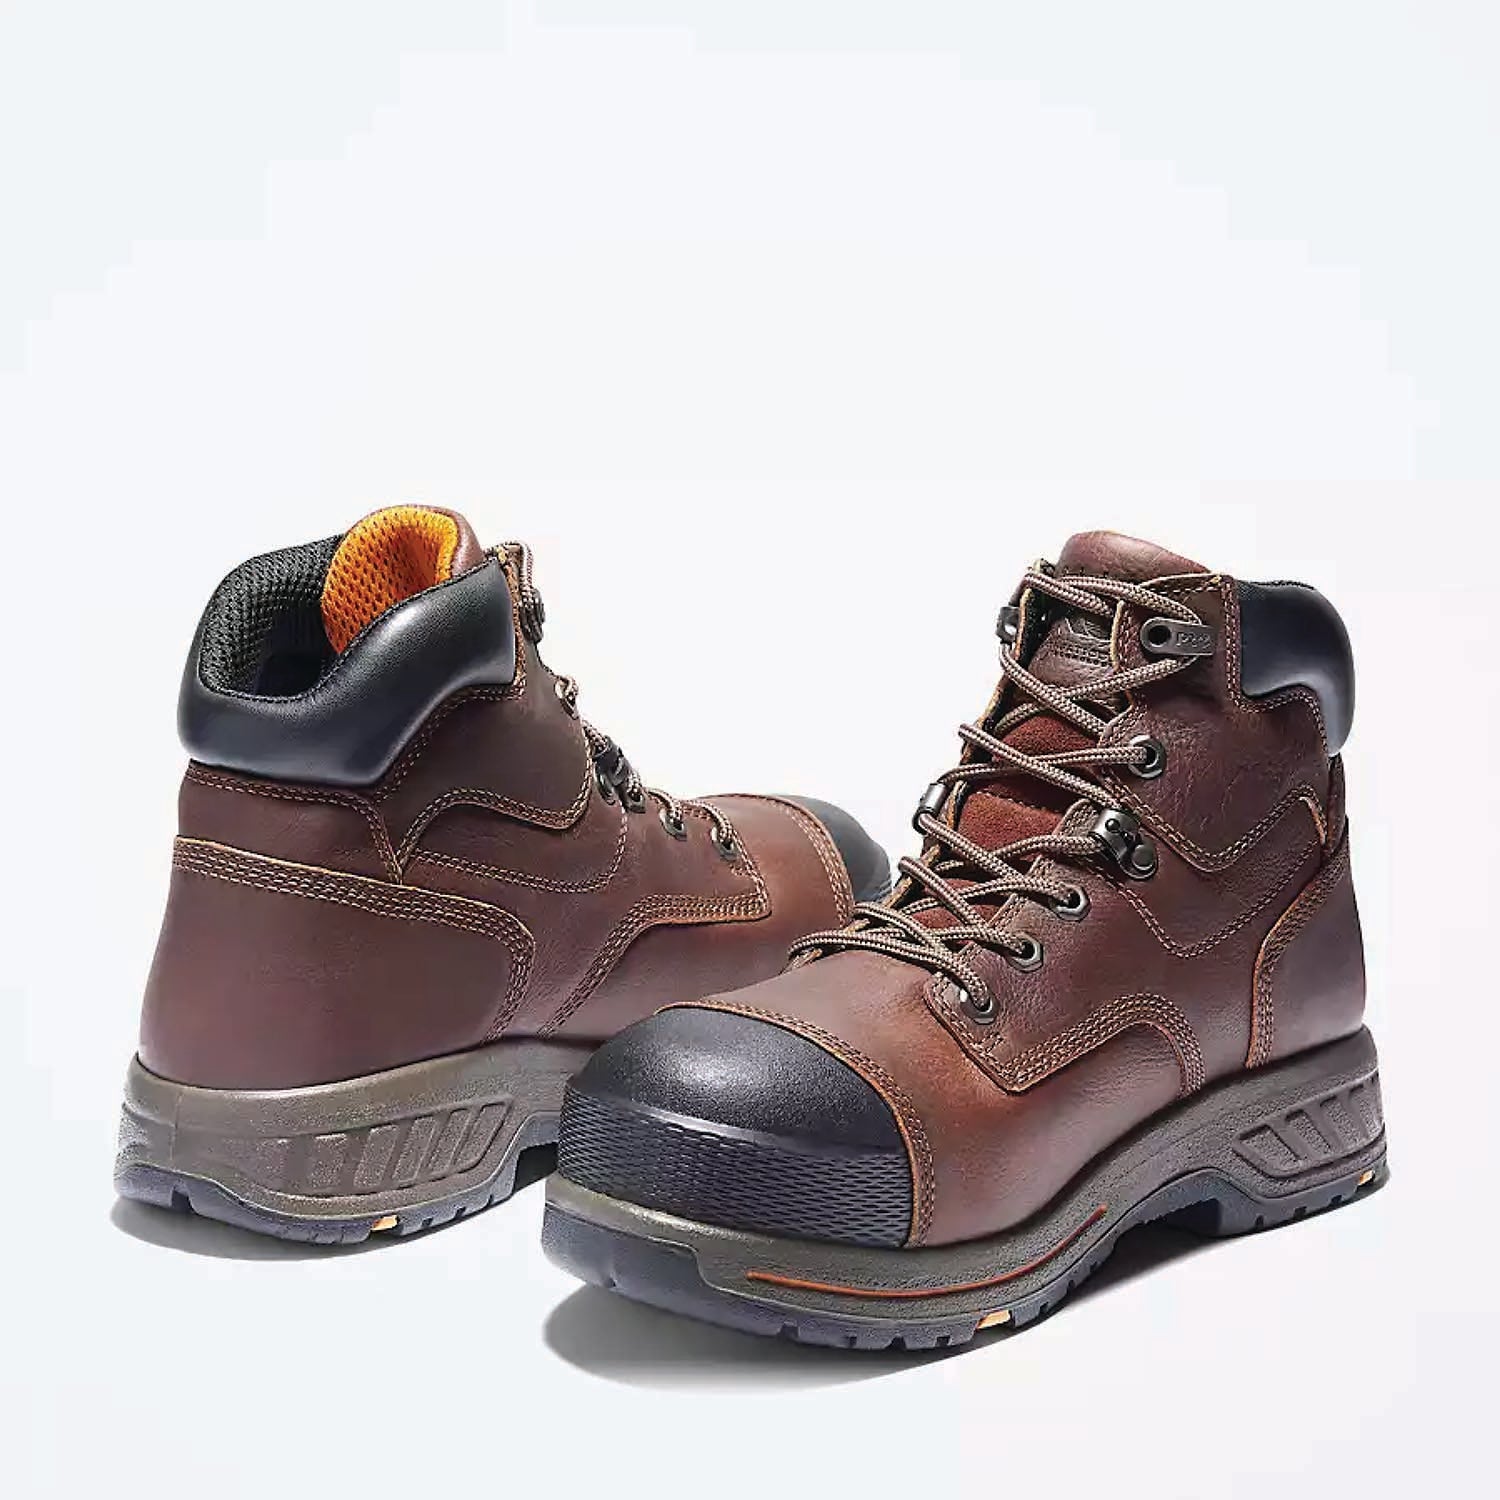 Timberland PRO® Helix HD Met Guard Composite Toe Work Boot - Men's - TB0A1VXG214 - PAIR 2